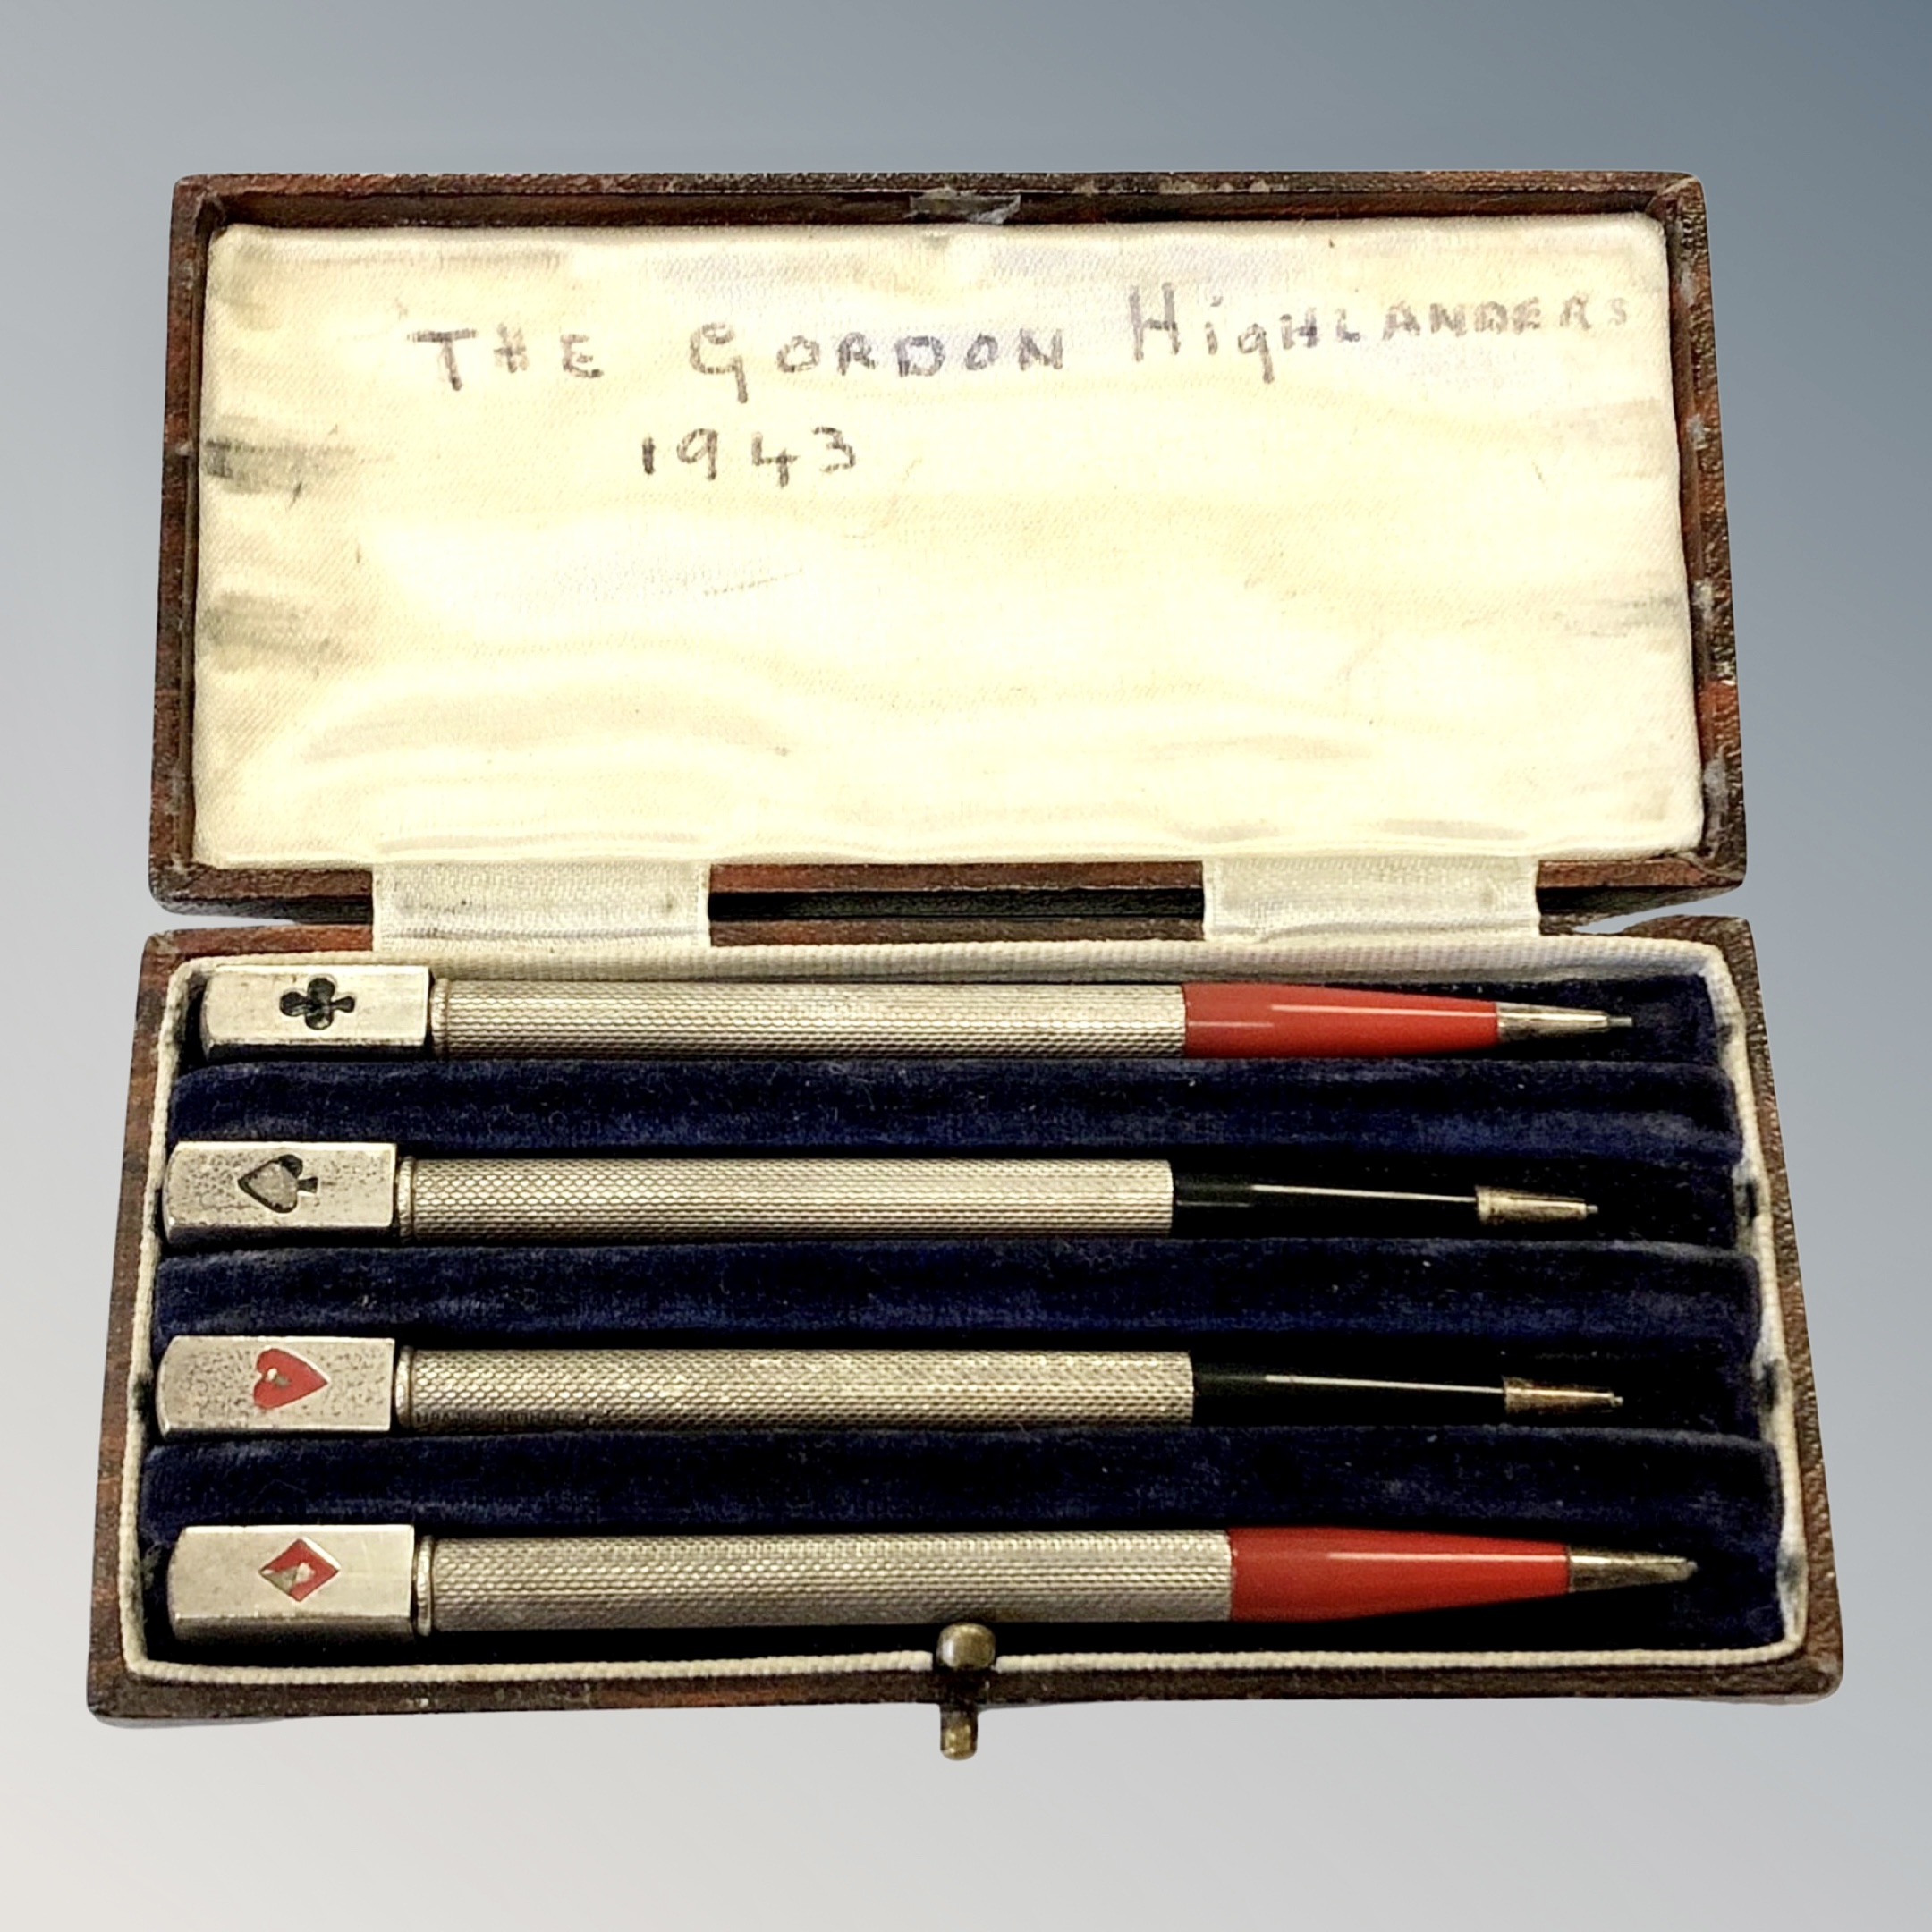 A set of four bridge pencils marked Gordon Highlanders,